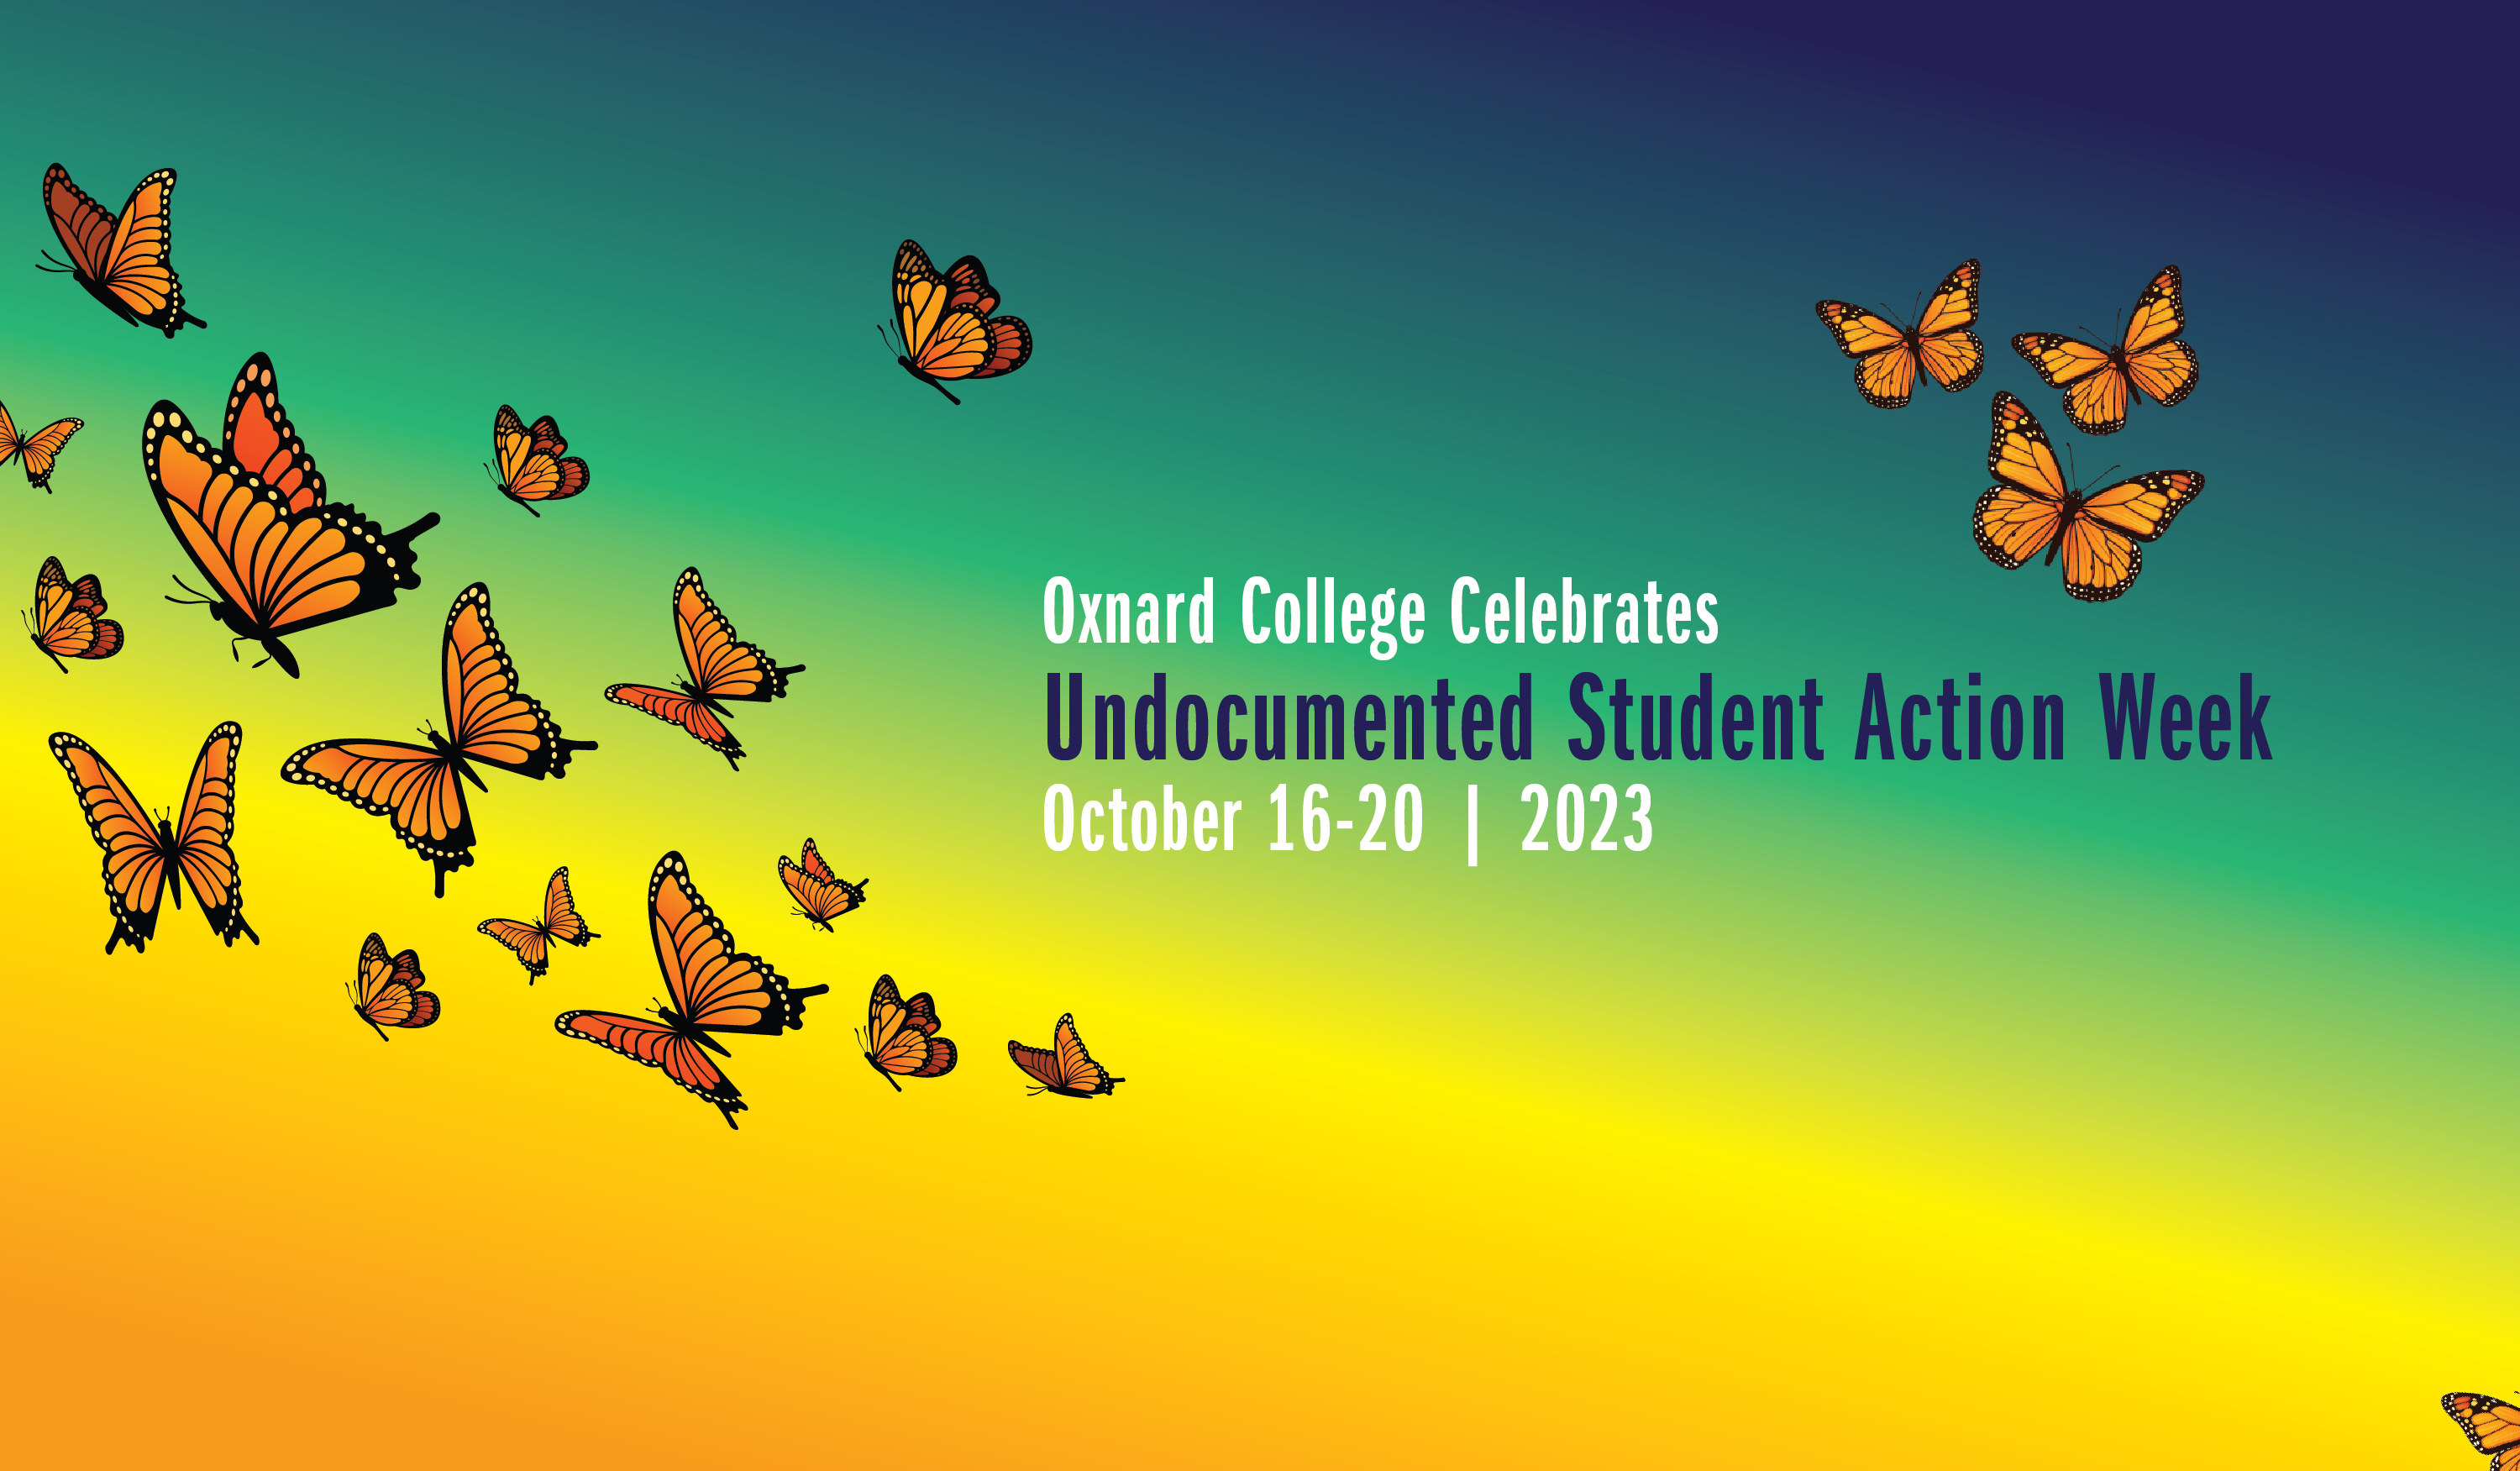 Oxnard College Undocumented Student Action Week October 16-20, 2023